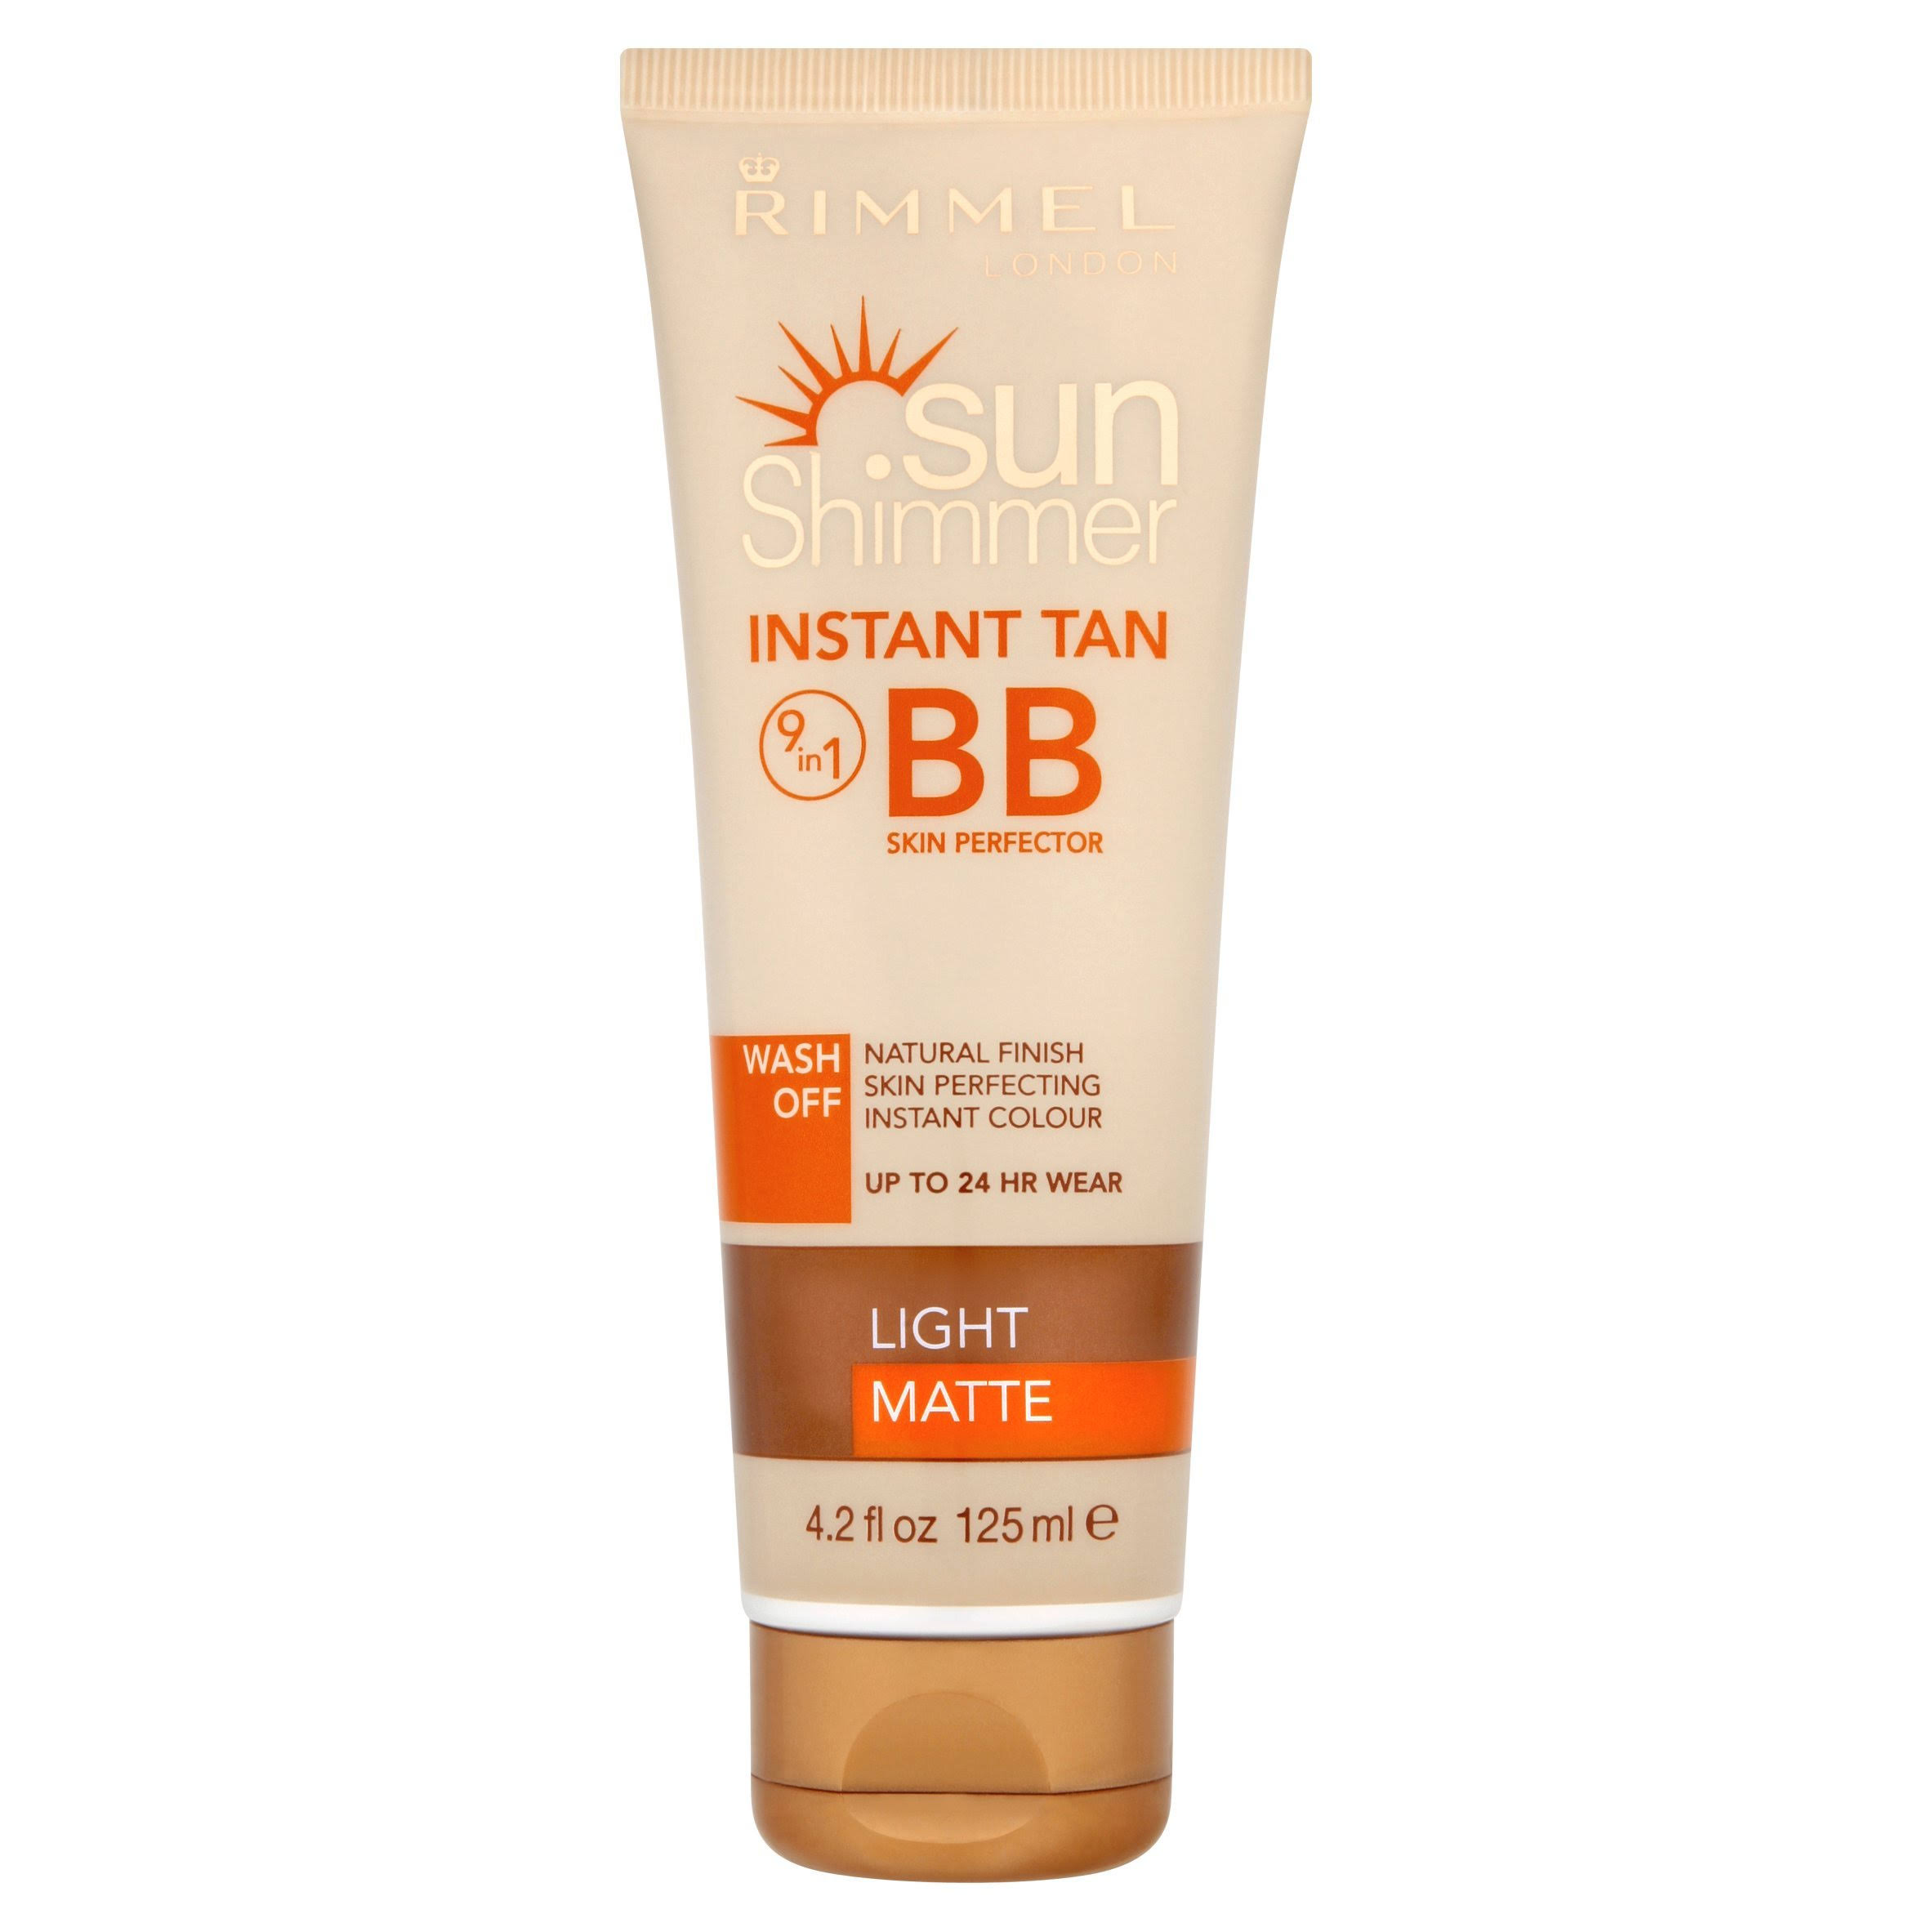 Briarhill Pharmacy - Rimmel Sun Shimmer Wash Off Instant Tan 9 in 1 Bb Skin  Perfector - Light Matte, 125ml | Pointy